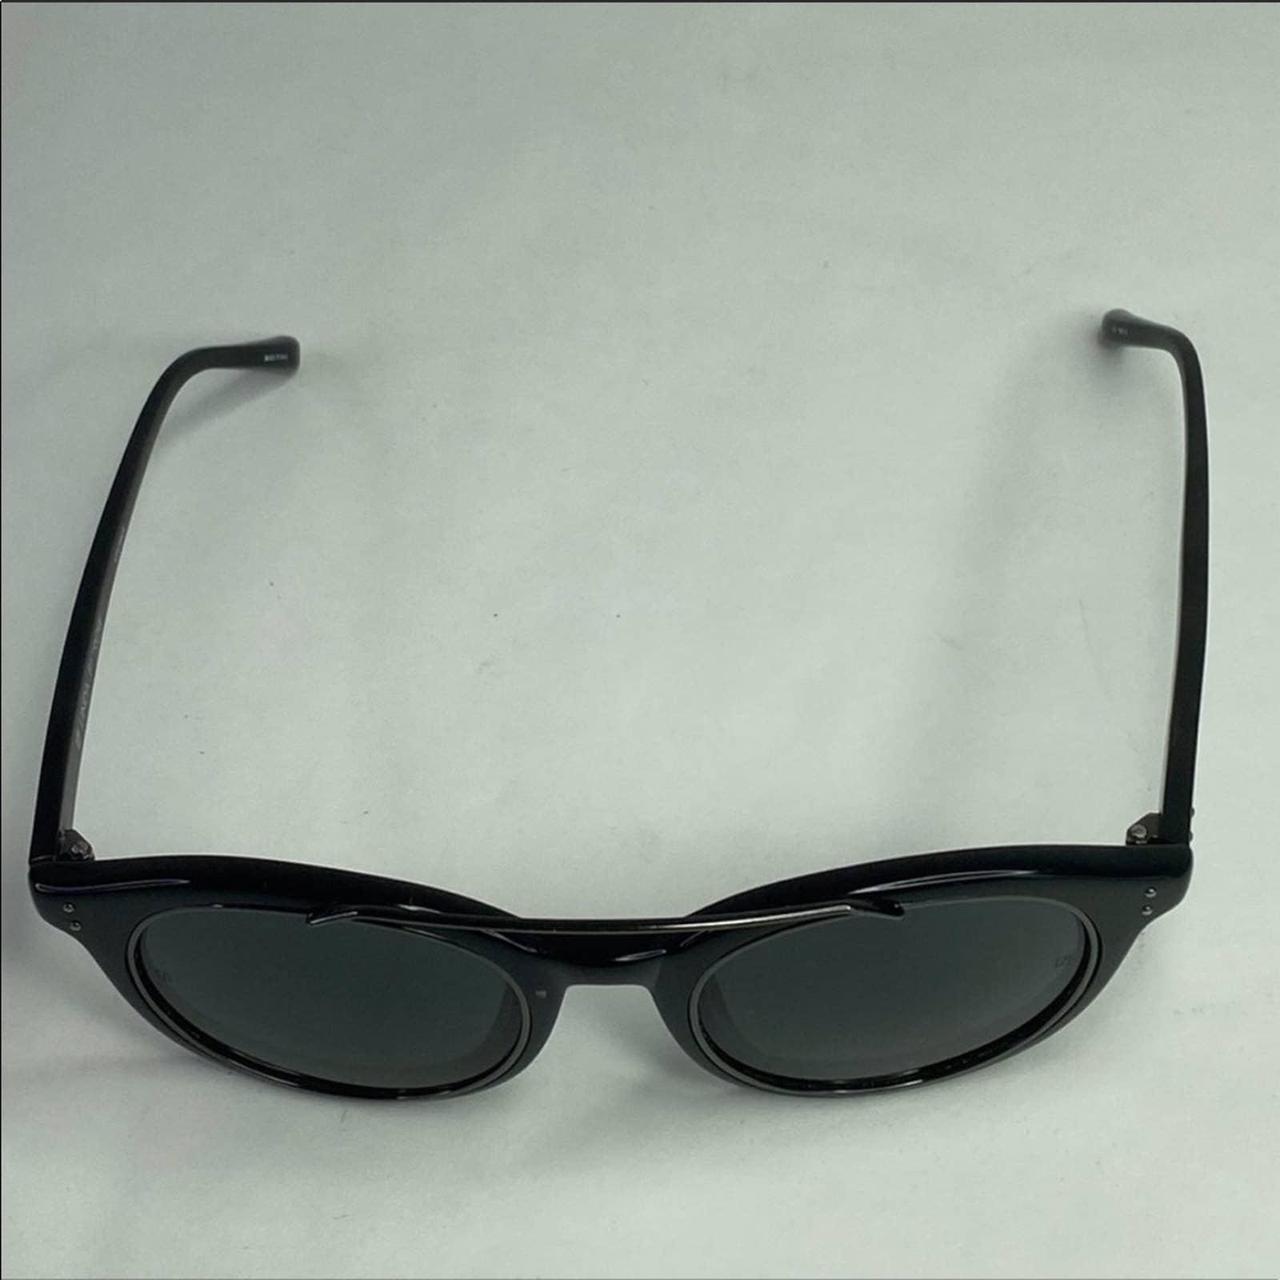 Product Image 3 - Linda farrow black frame sunglasses
Has